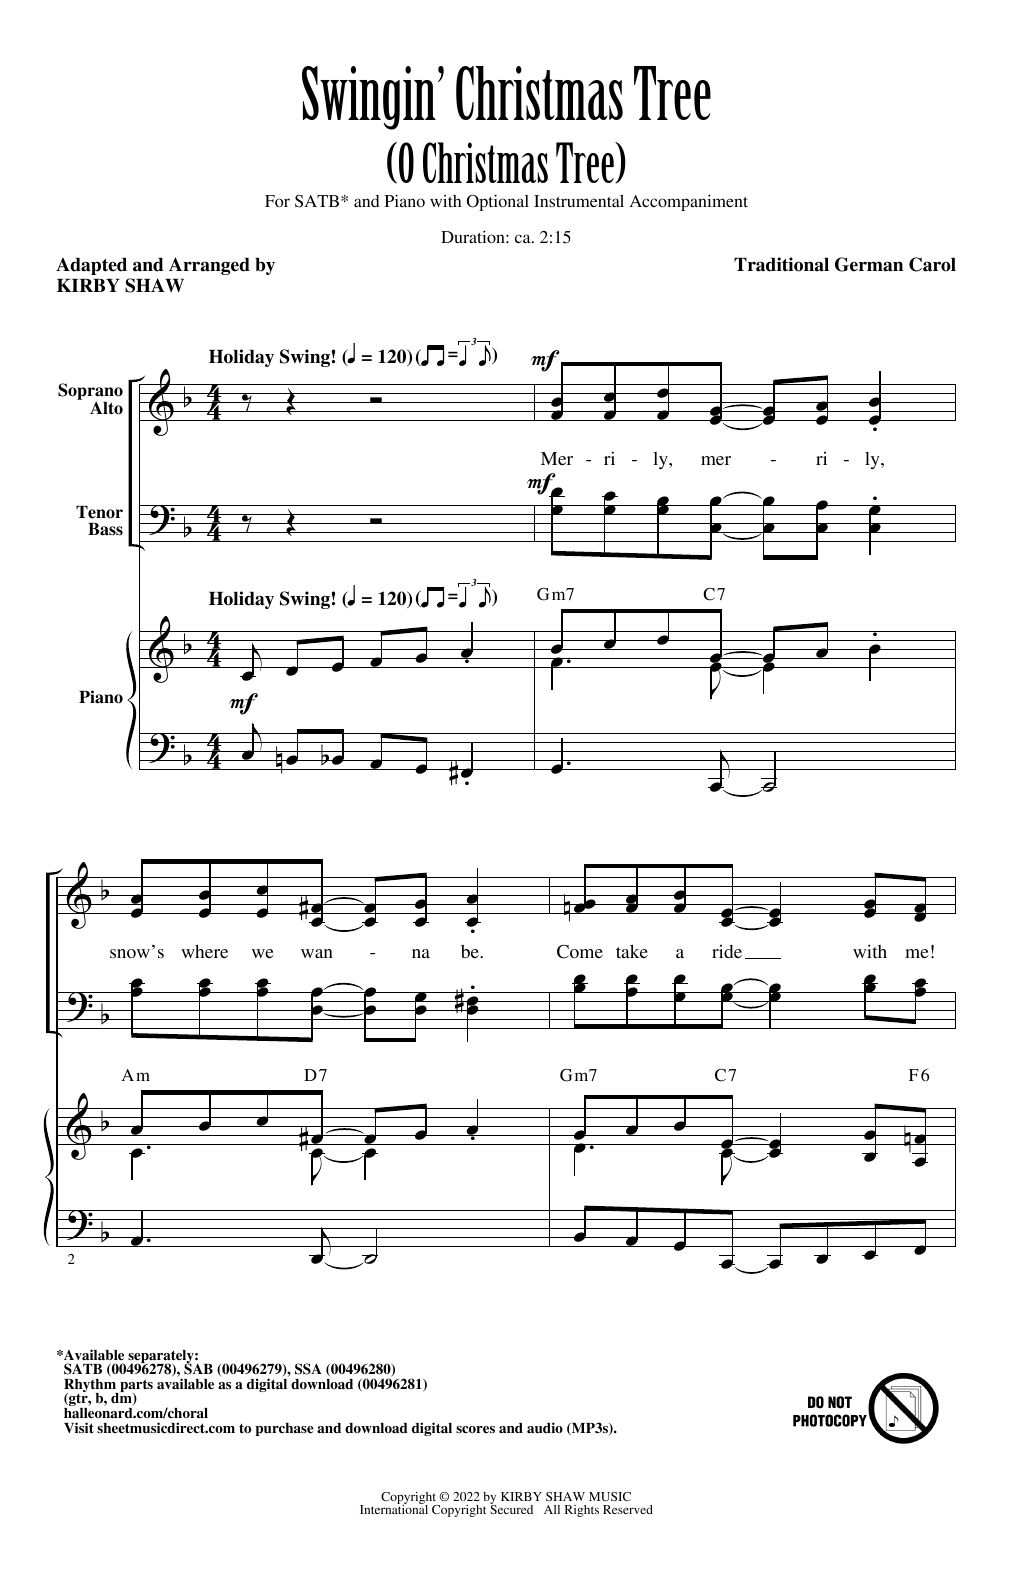 Traditional German Carol Swingin' Christmas Tree (O Christmas Tree) (arr. Kirby Shaw) sheet music notes and chords arranged for SAB Choir